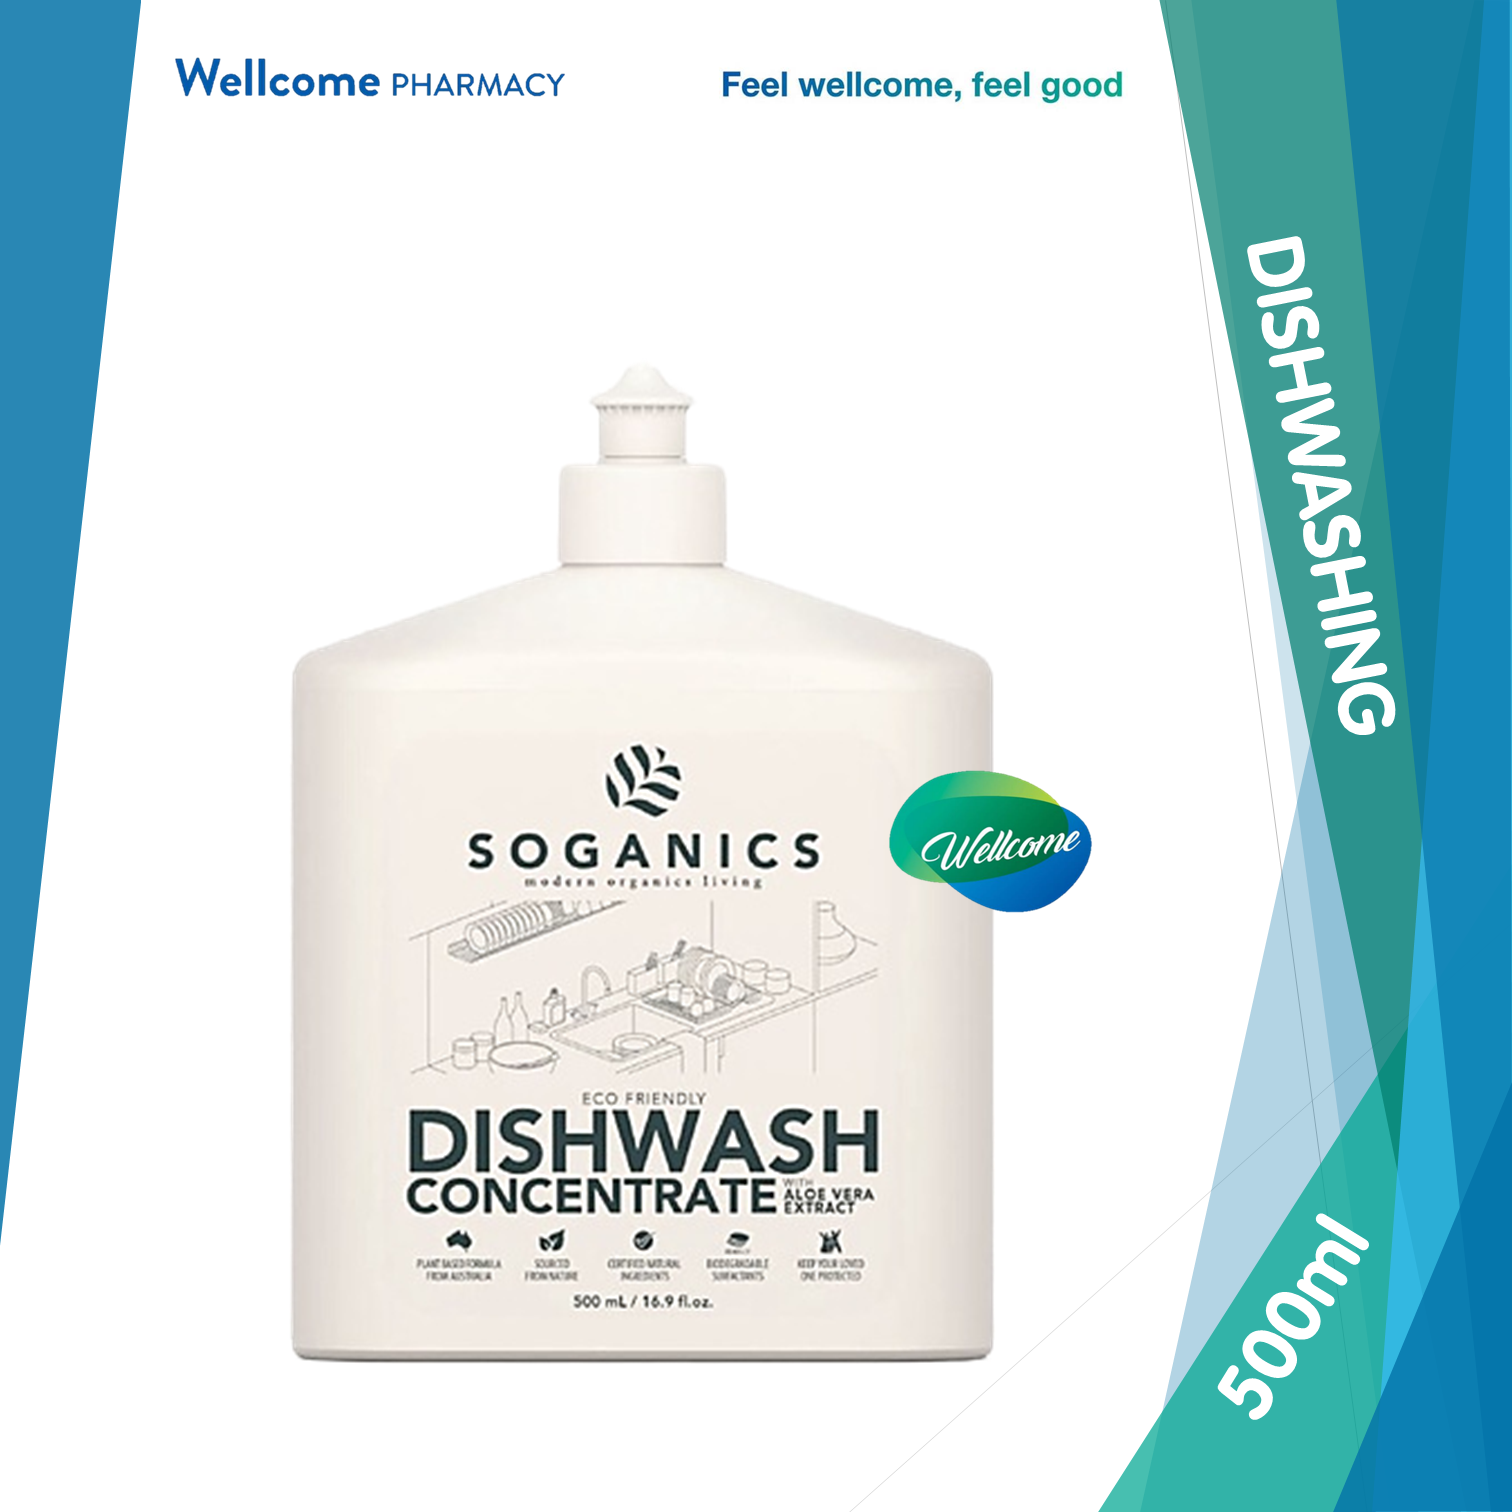 Soganics Dishwash Concentrate - 500ml.png